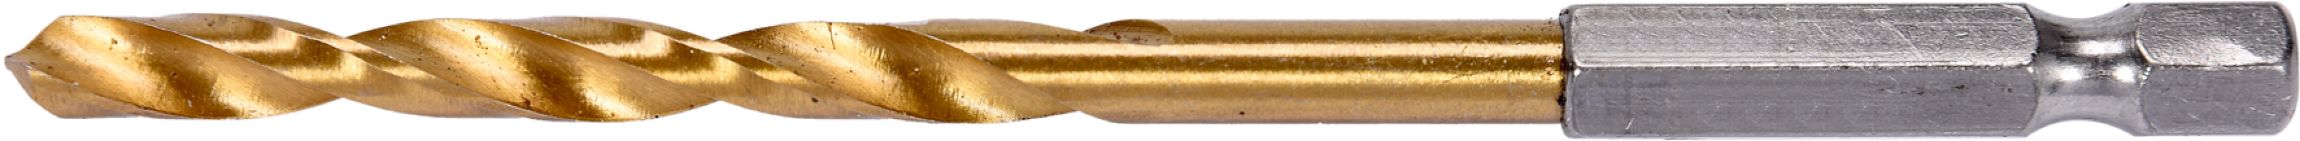 Vrtk do kovu HSS-titan 3,0mm se estihranou stopkou 1/4" Yato YT-44754